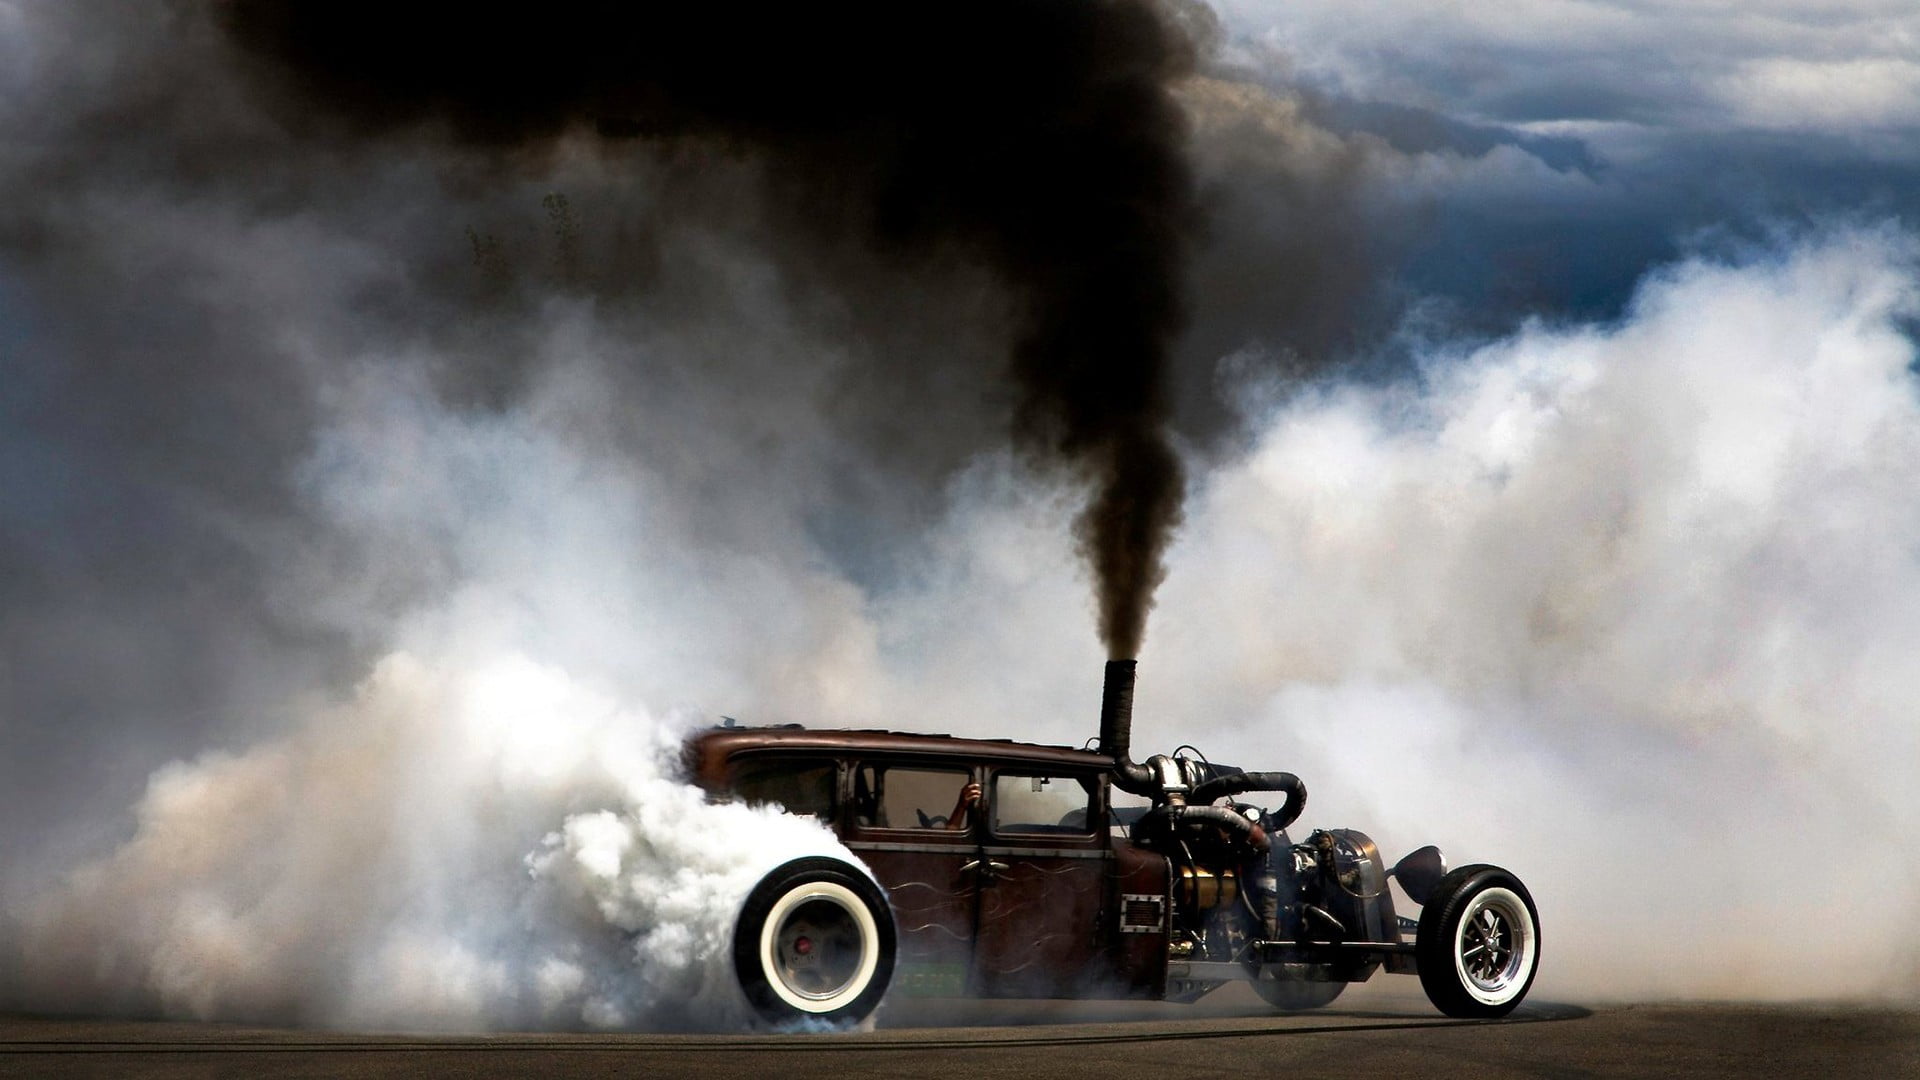 vintage black coupe, smoke, car, Burnout, Hot Rod, Rat Rod, smoke - physical structure